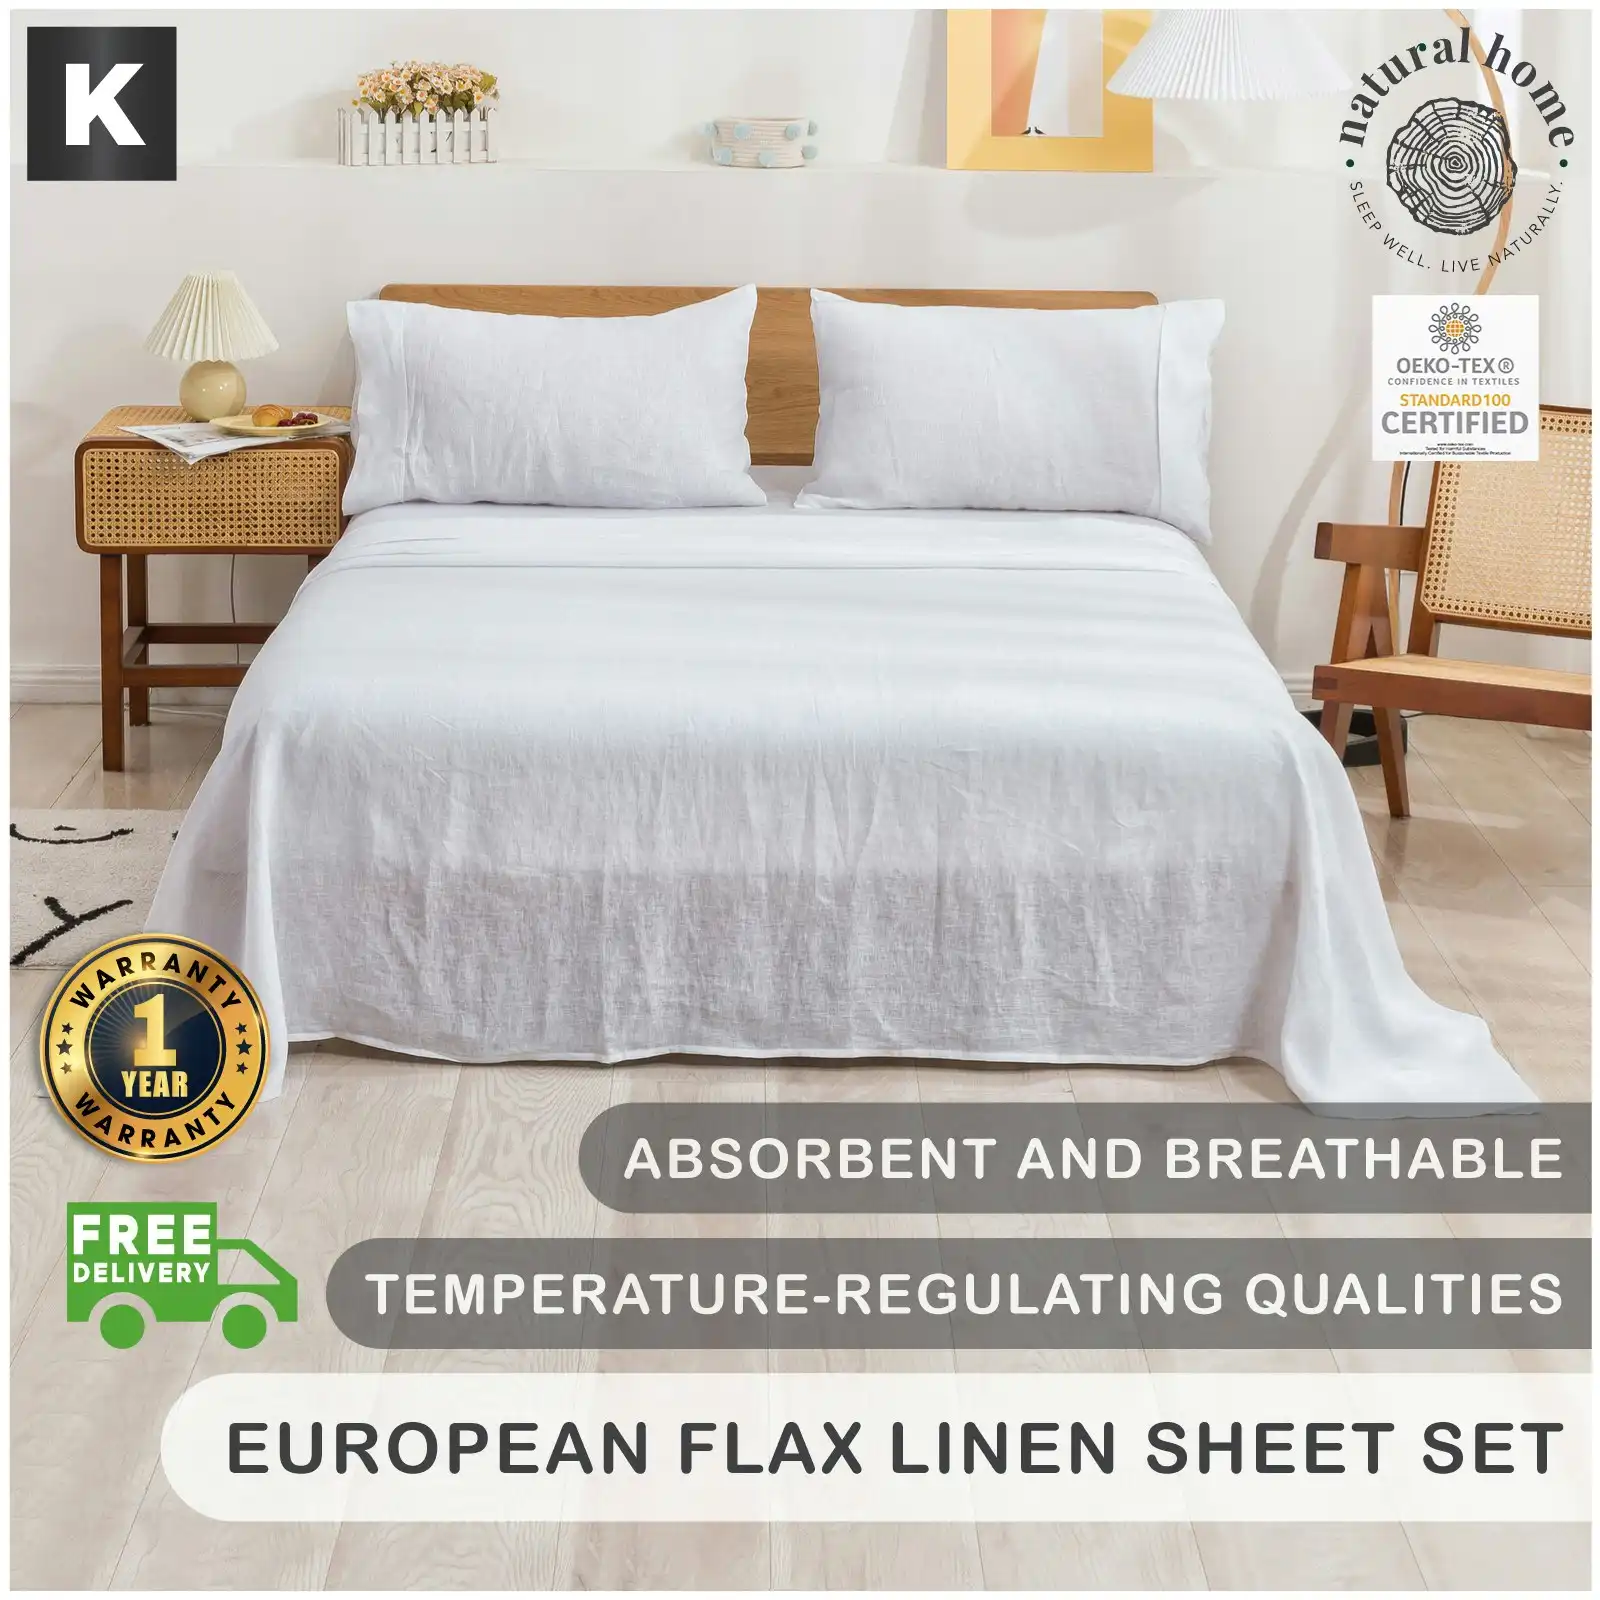 Natural Home 100% European Flax Linen Sheet Set White King Bed